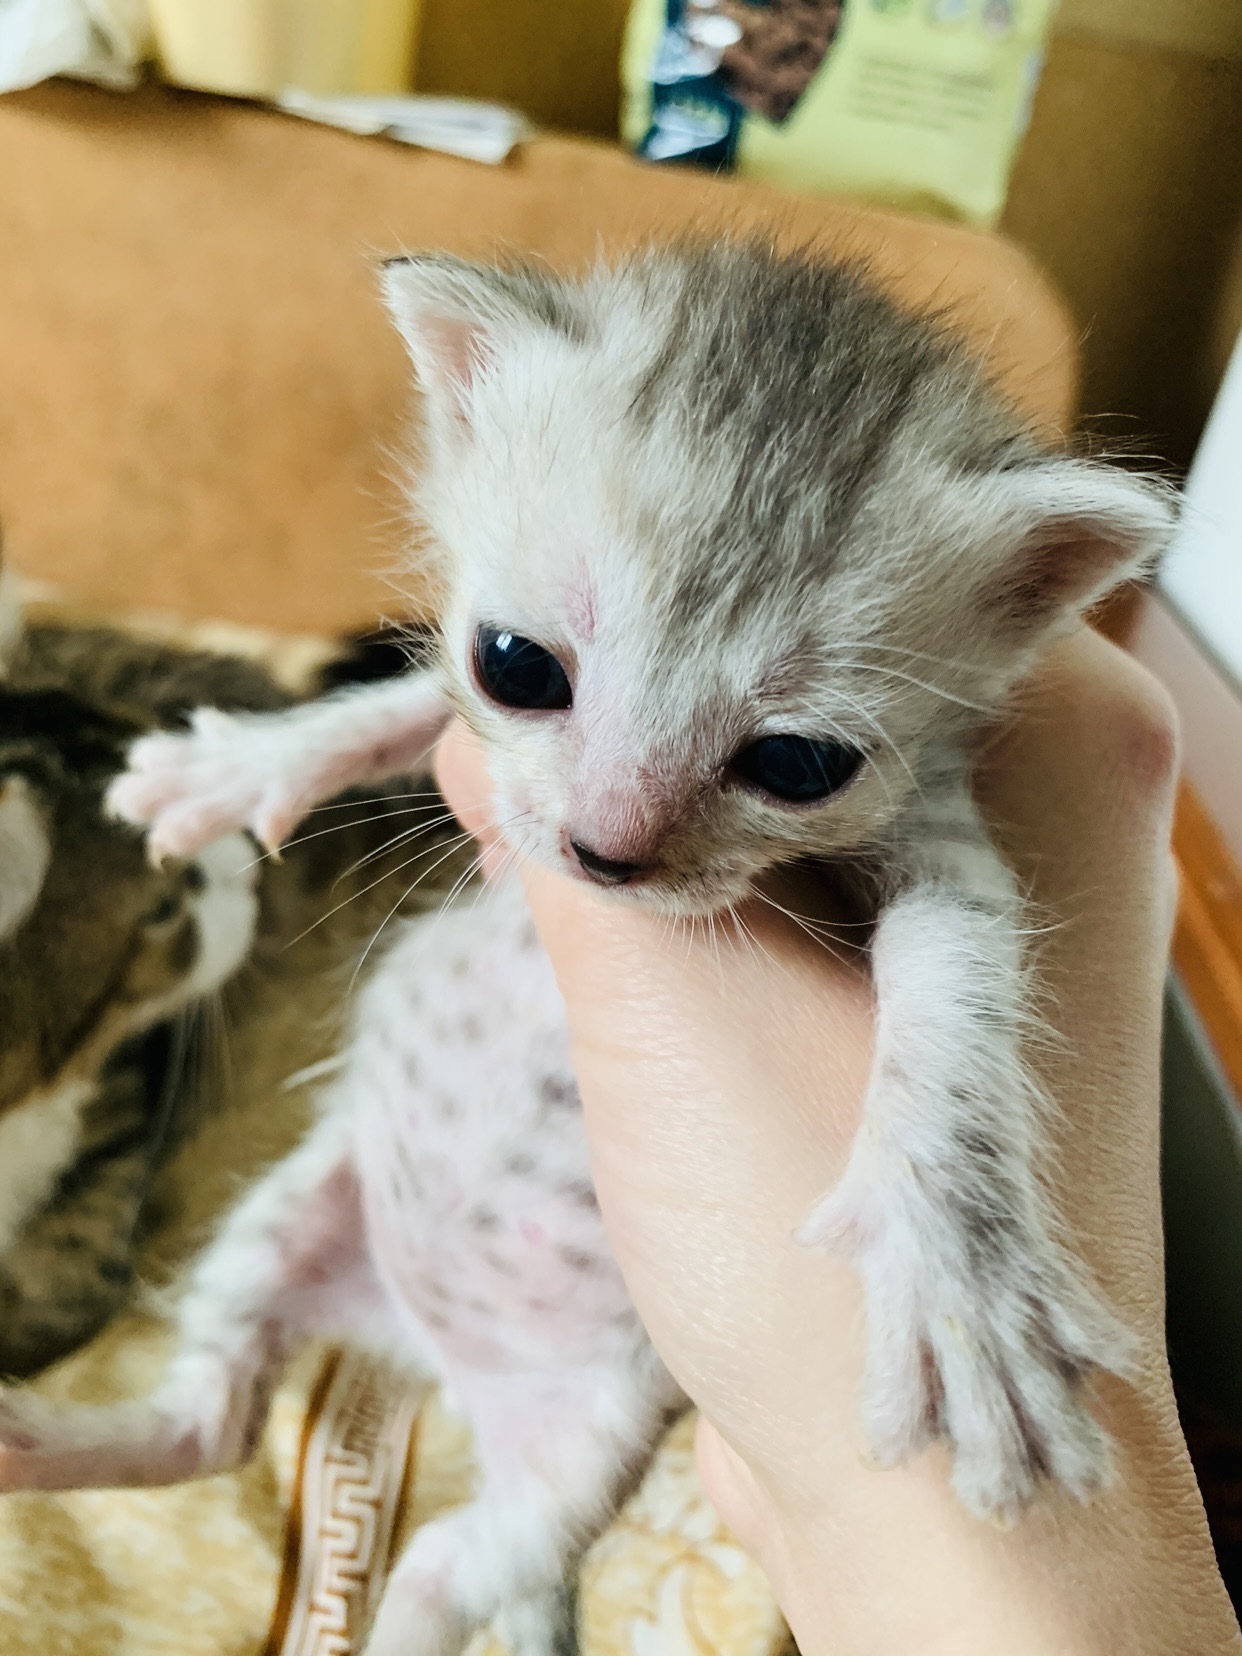 Kitten lil pixie 100% FREE: